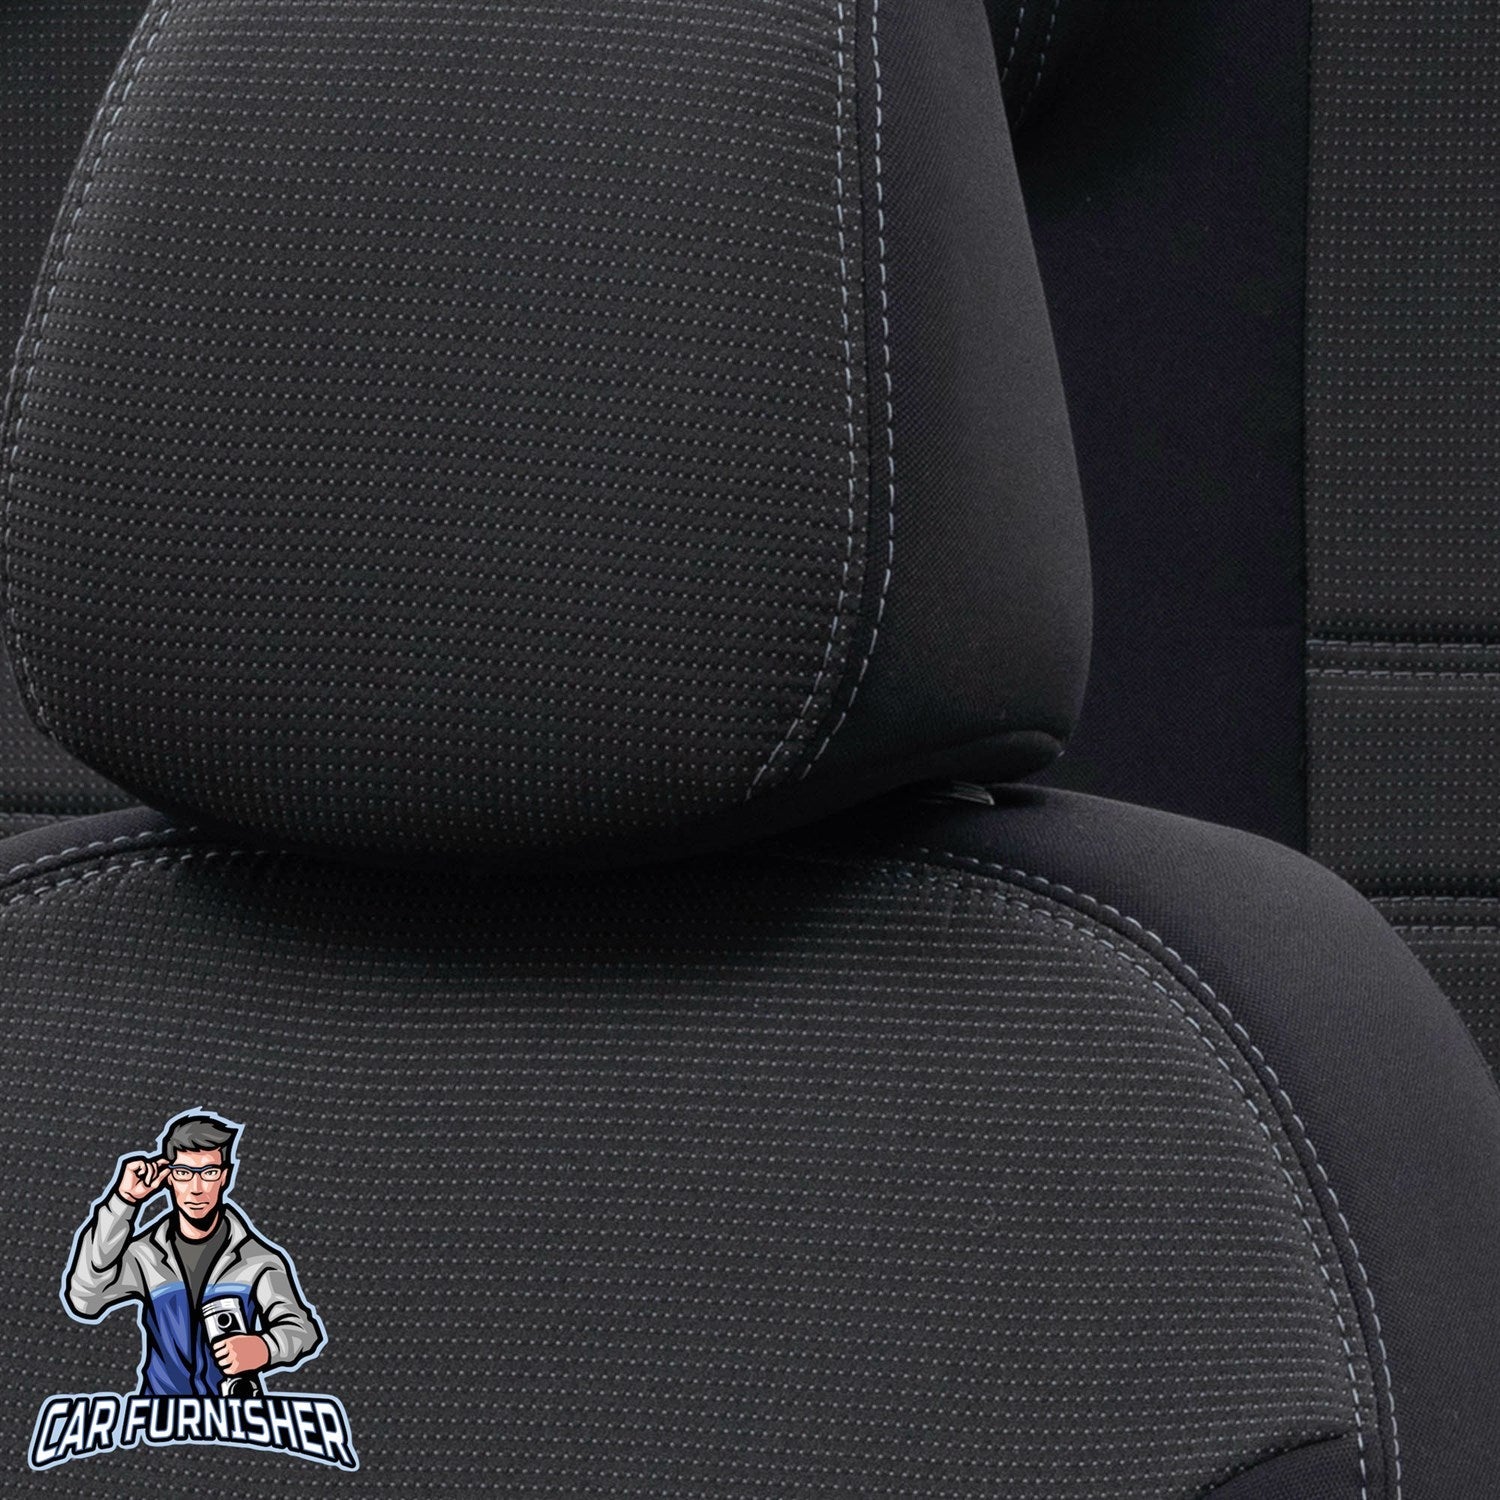 Skoda Octavia Car Seat Covers 1999-2023 Original Design Dark Gray Full Set (5 Seats + Handrest) Fabric